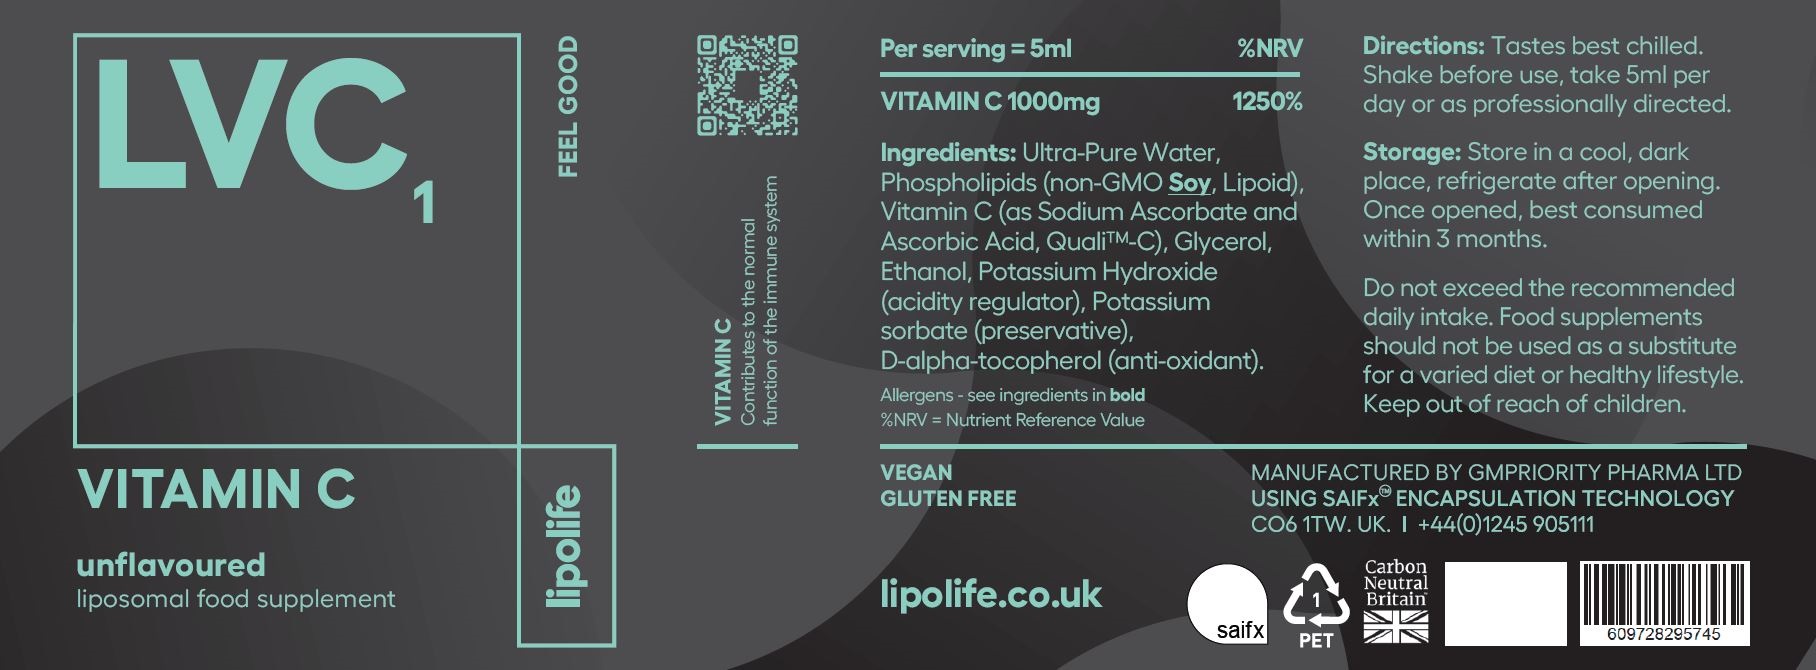 liposomal vitamin C nutritional information